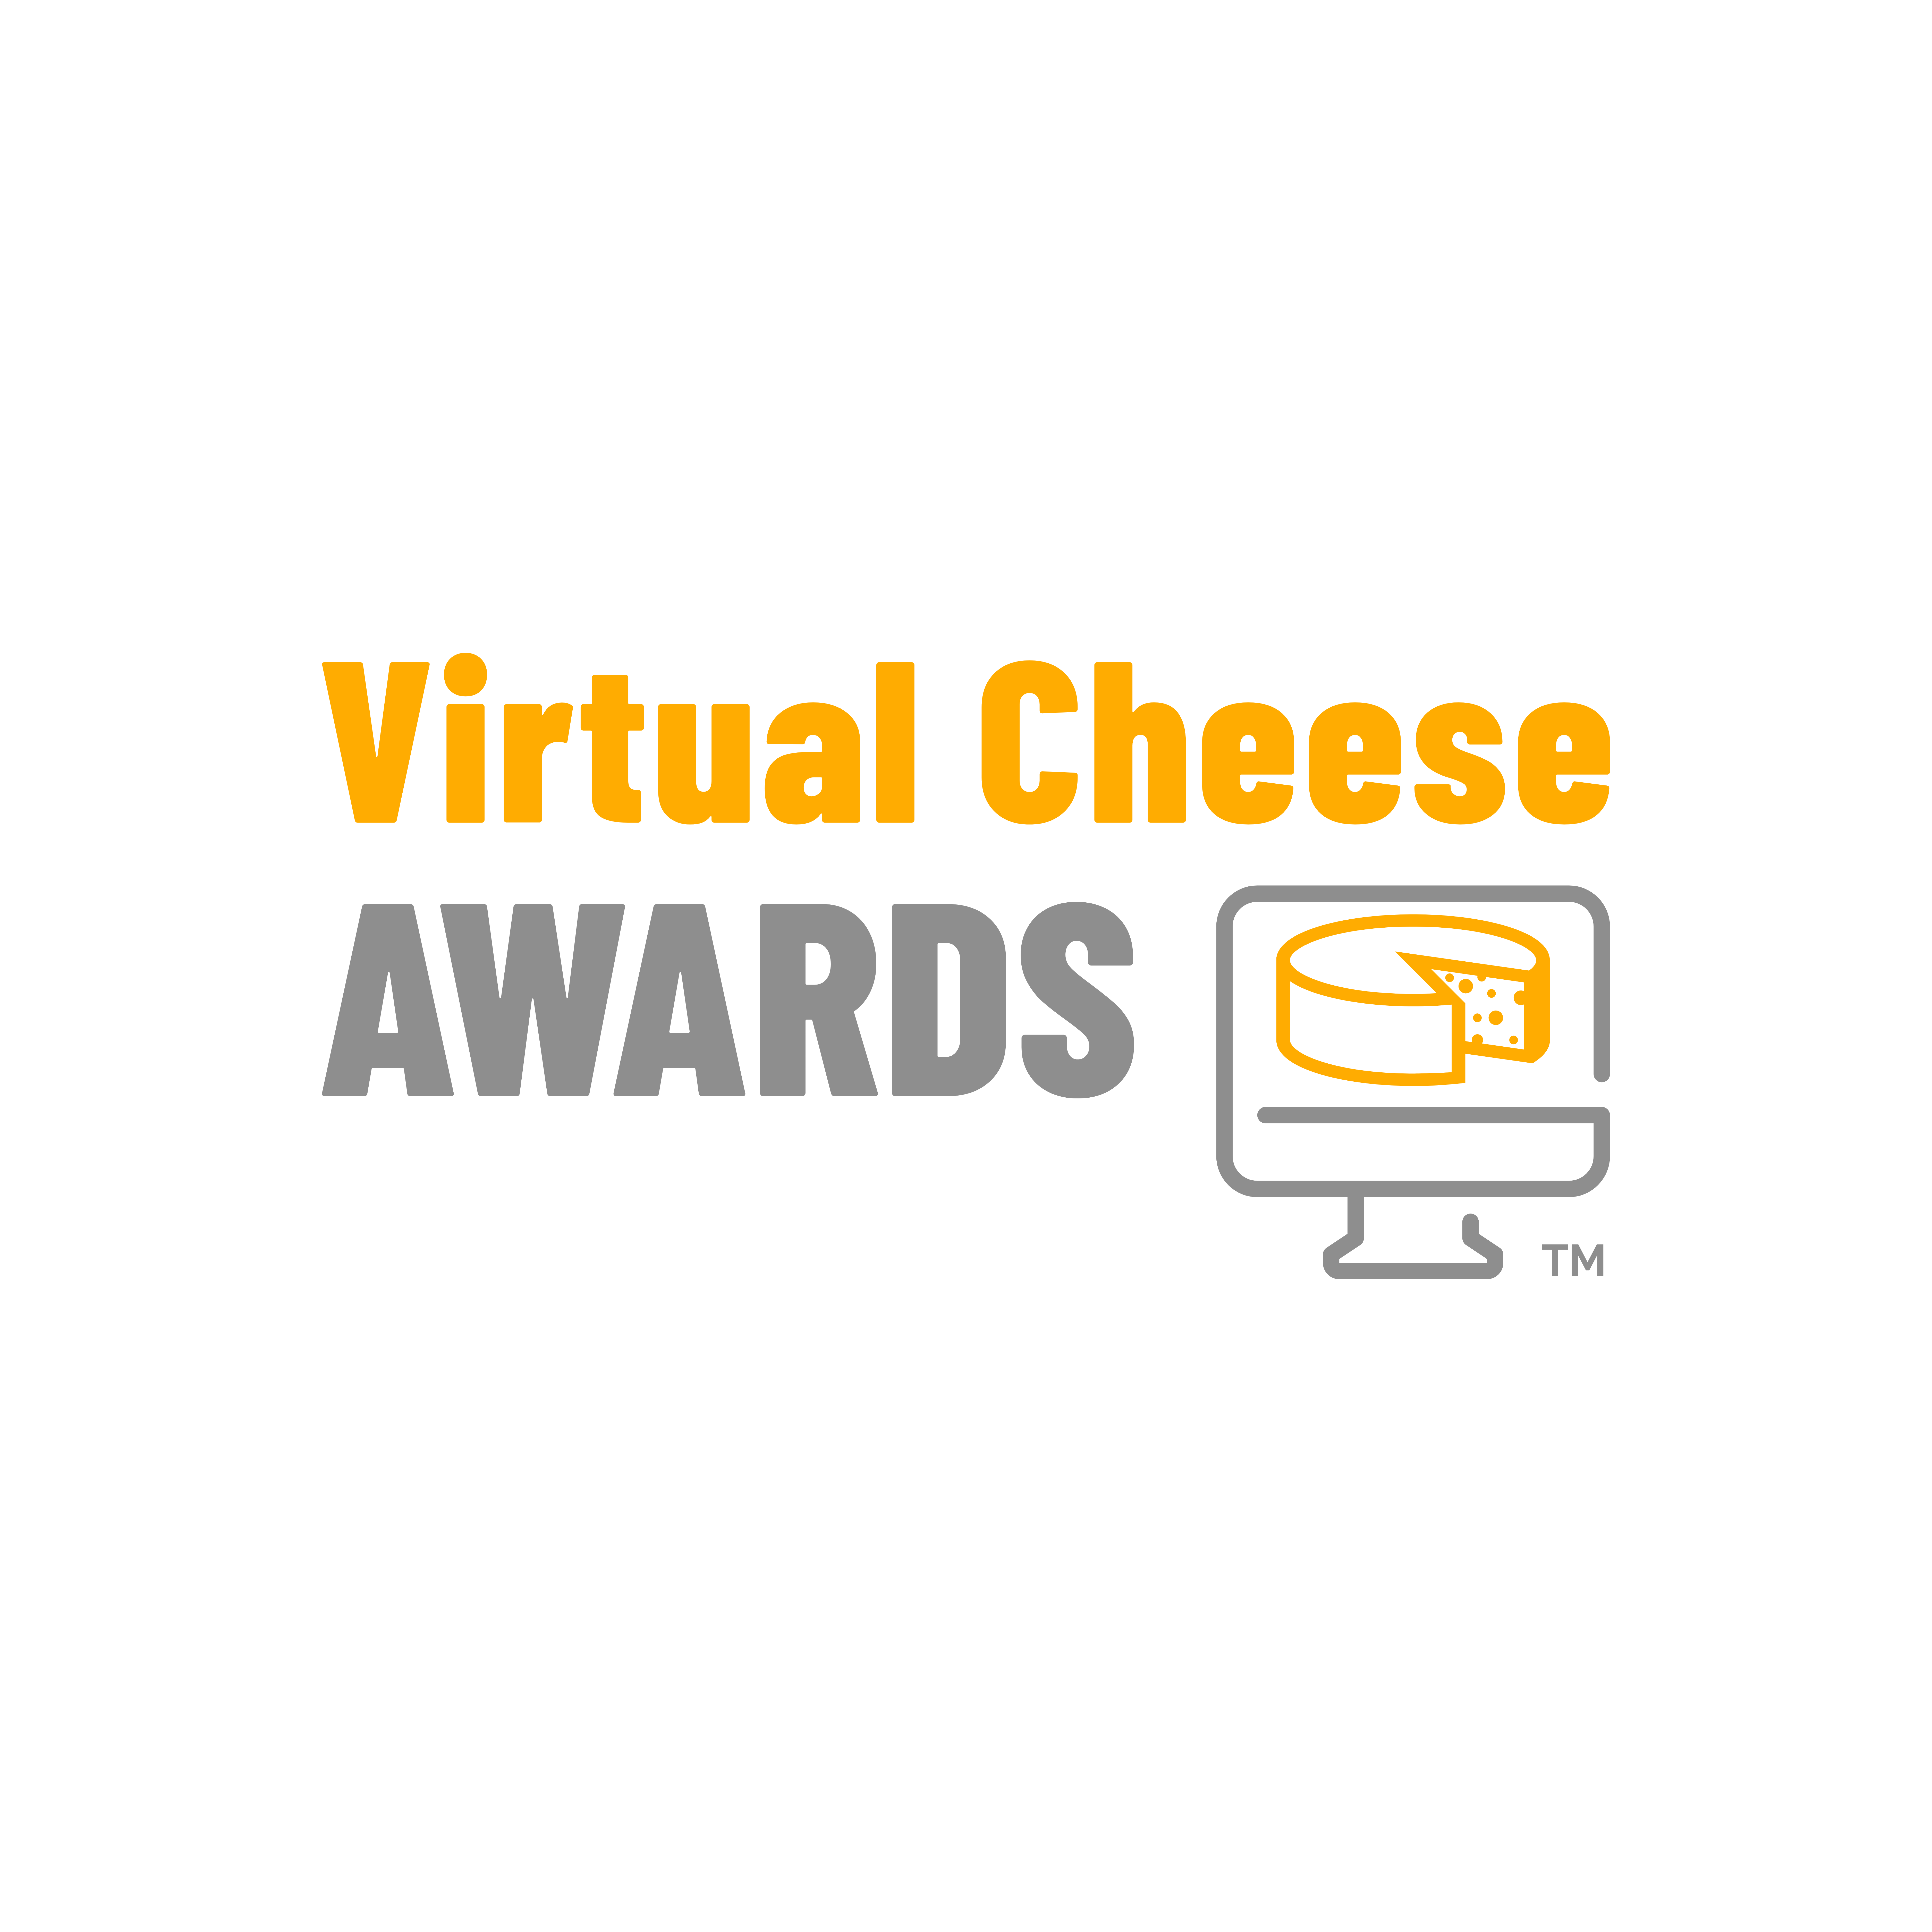 The Virtual Cheese Awards